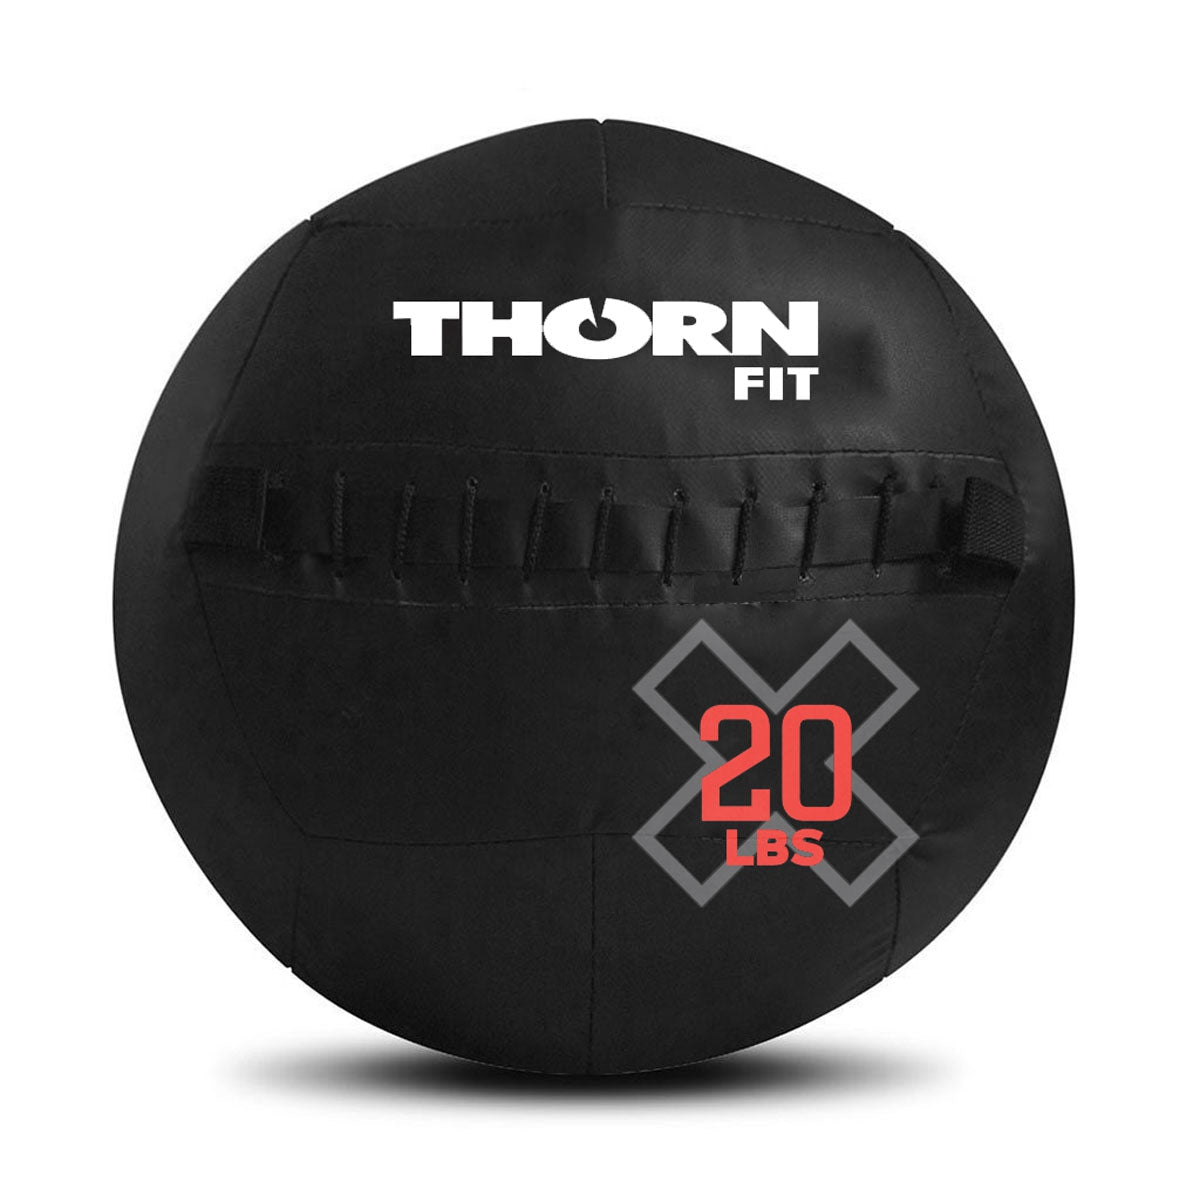 Thorn Med ball 20lbs